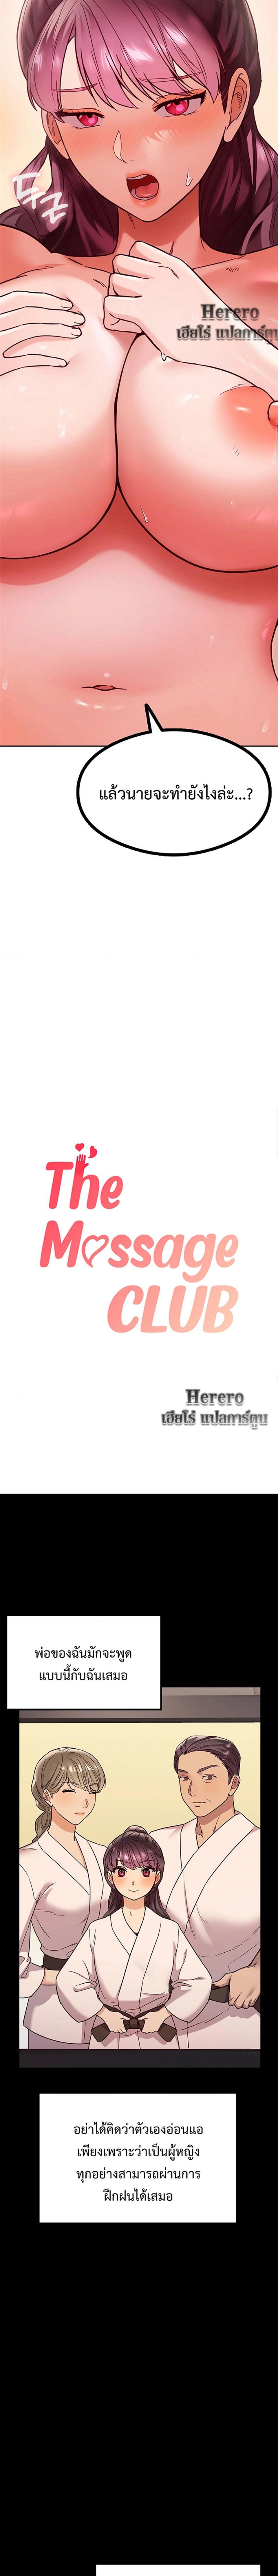 The Massage Club 6 02